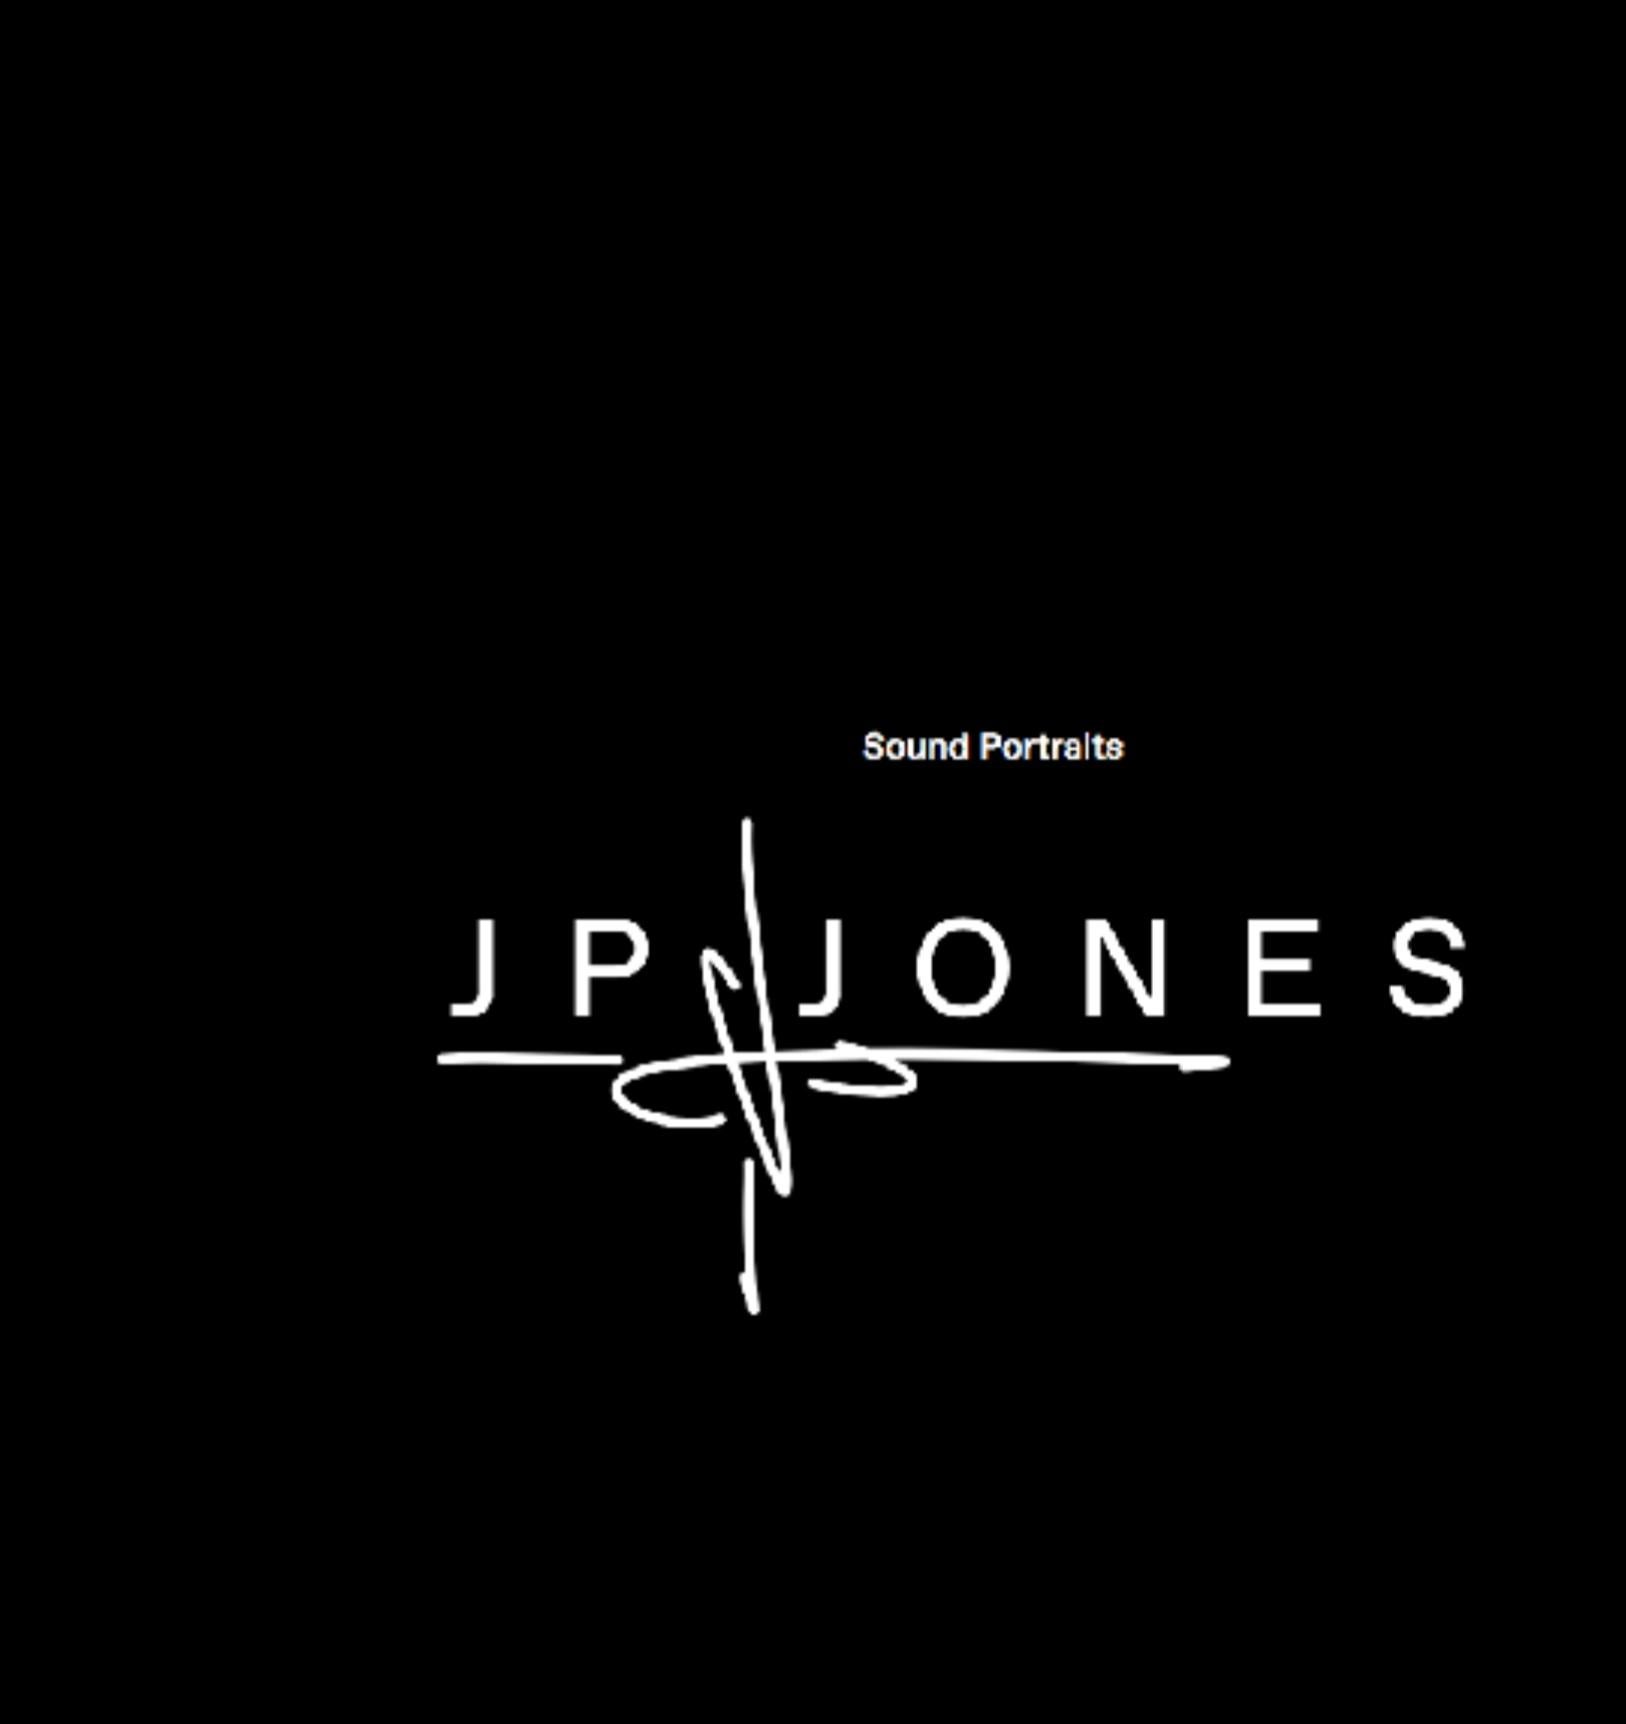 JP JONES  One Love by U2 -  100 X 100 CM -  Acrylic - Sound Pattern - Emerging 2